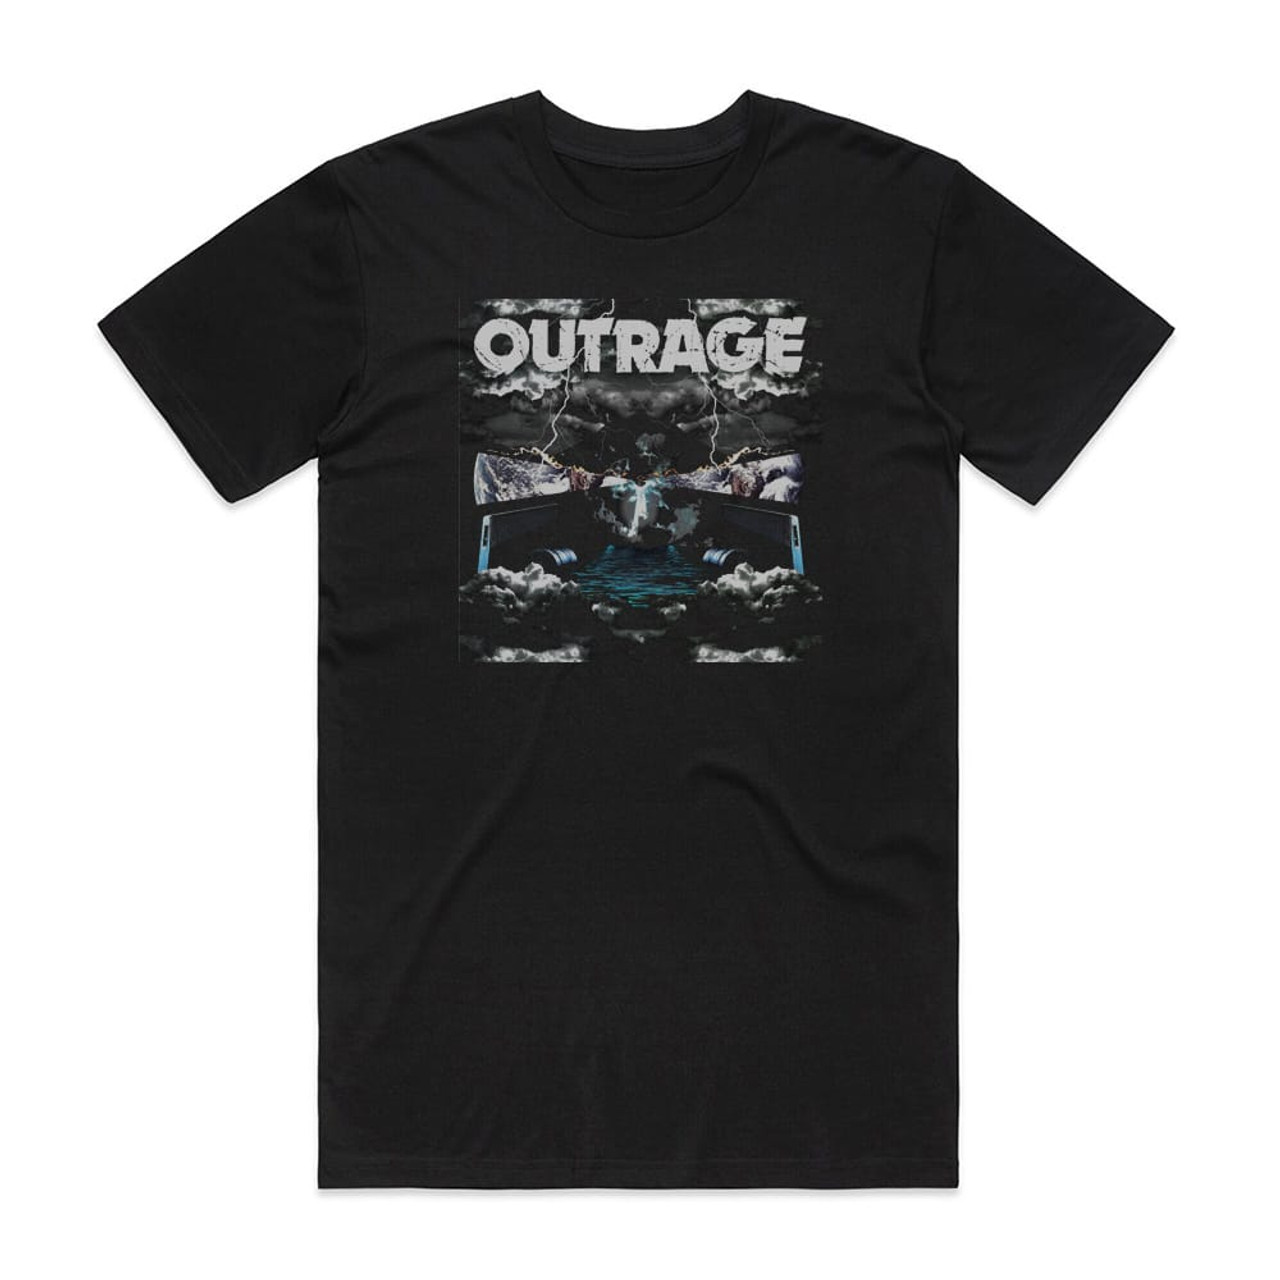 Outrage Outrage Album Cover T-Shirt Black